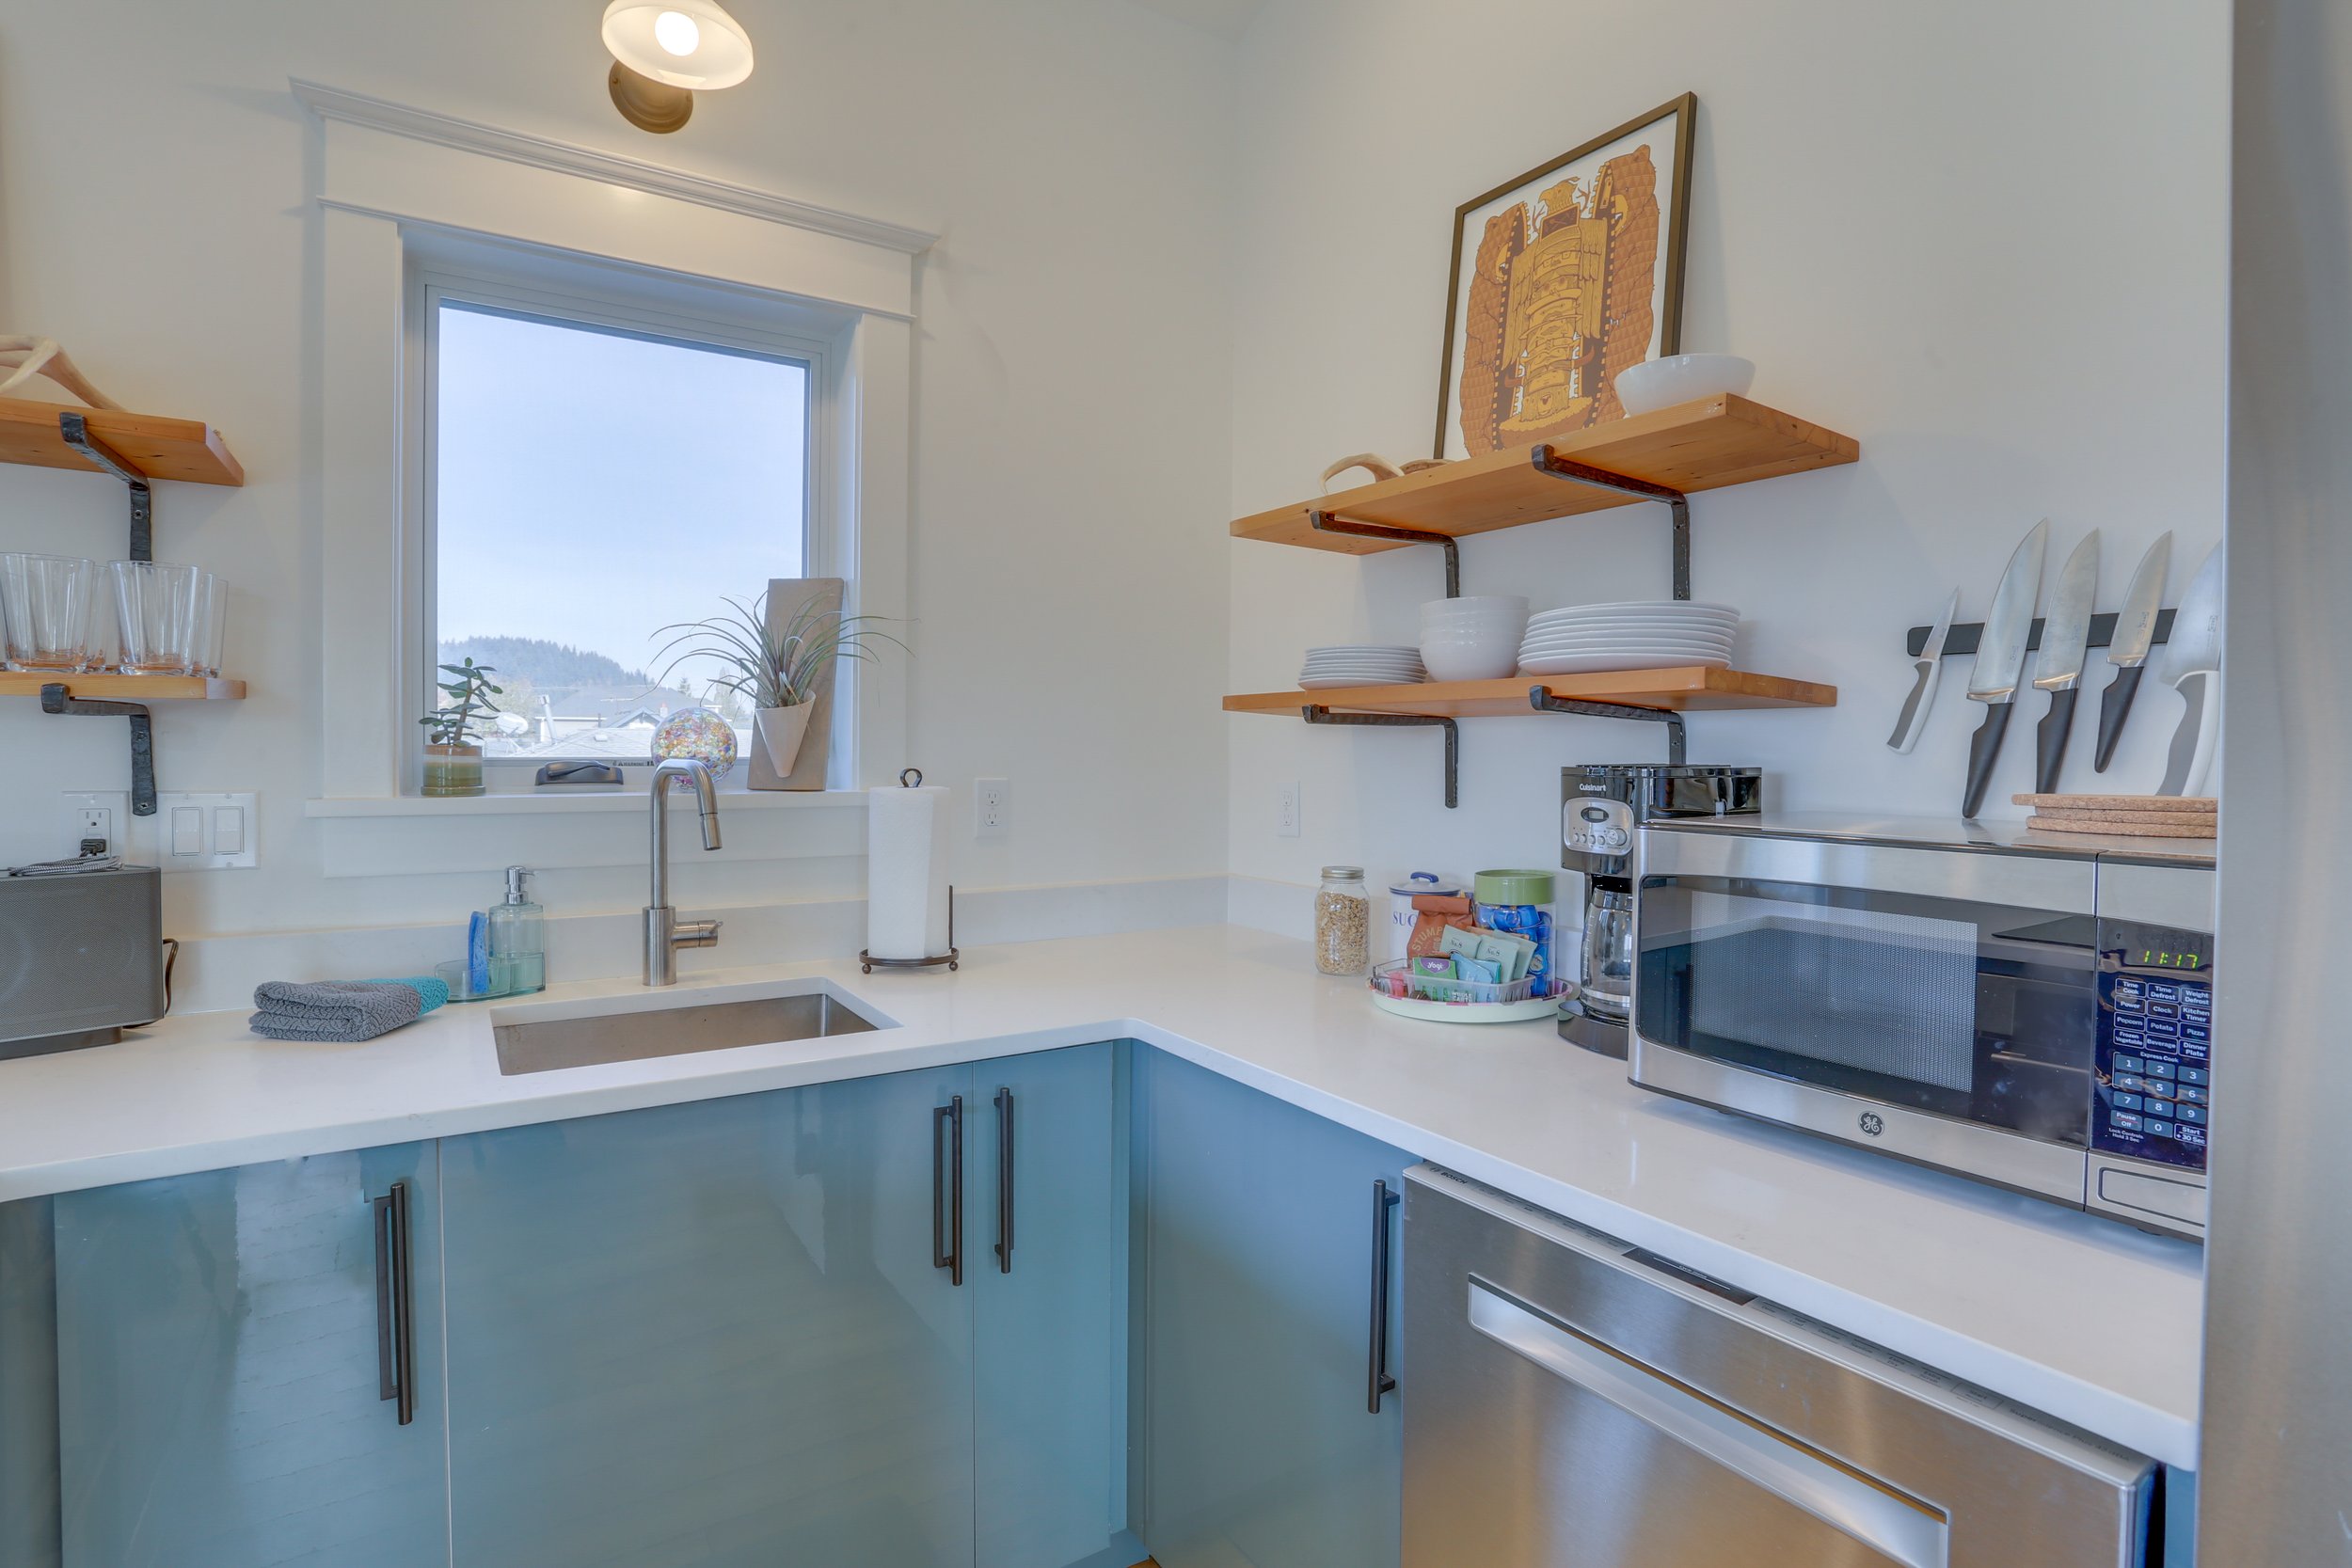 Harka-Architecture-kitchen-shelves.jpg